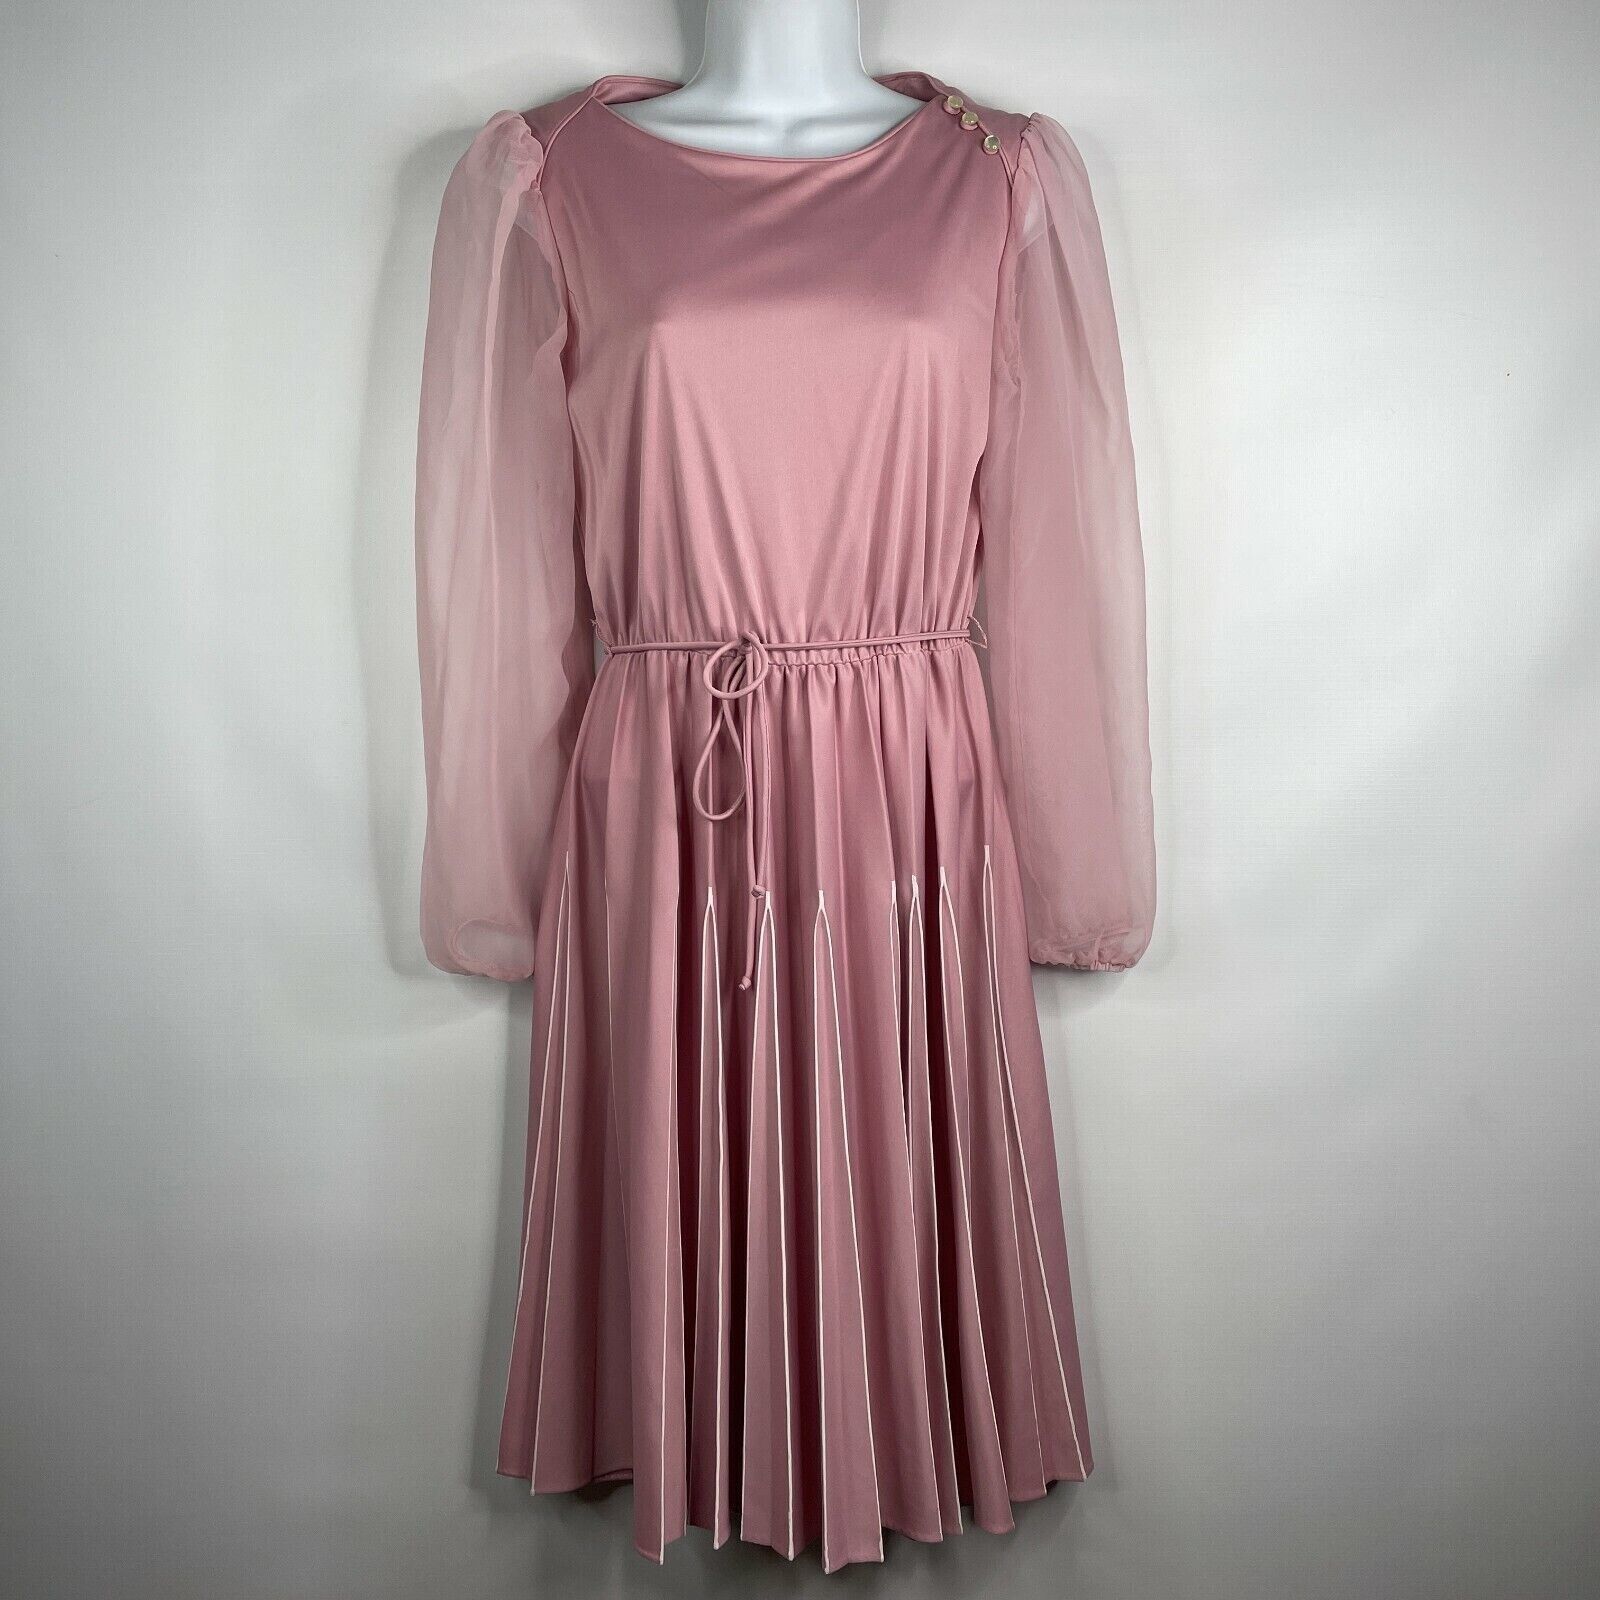 Vintage 70s Lavender Belted Contrast Stich Pleat Fit Flare Dress Size L / US 10 / IT 46 - 1 Preview